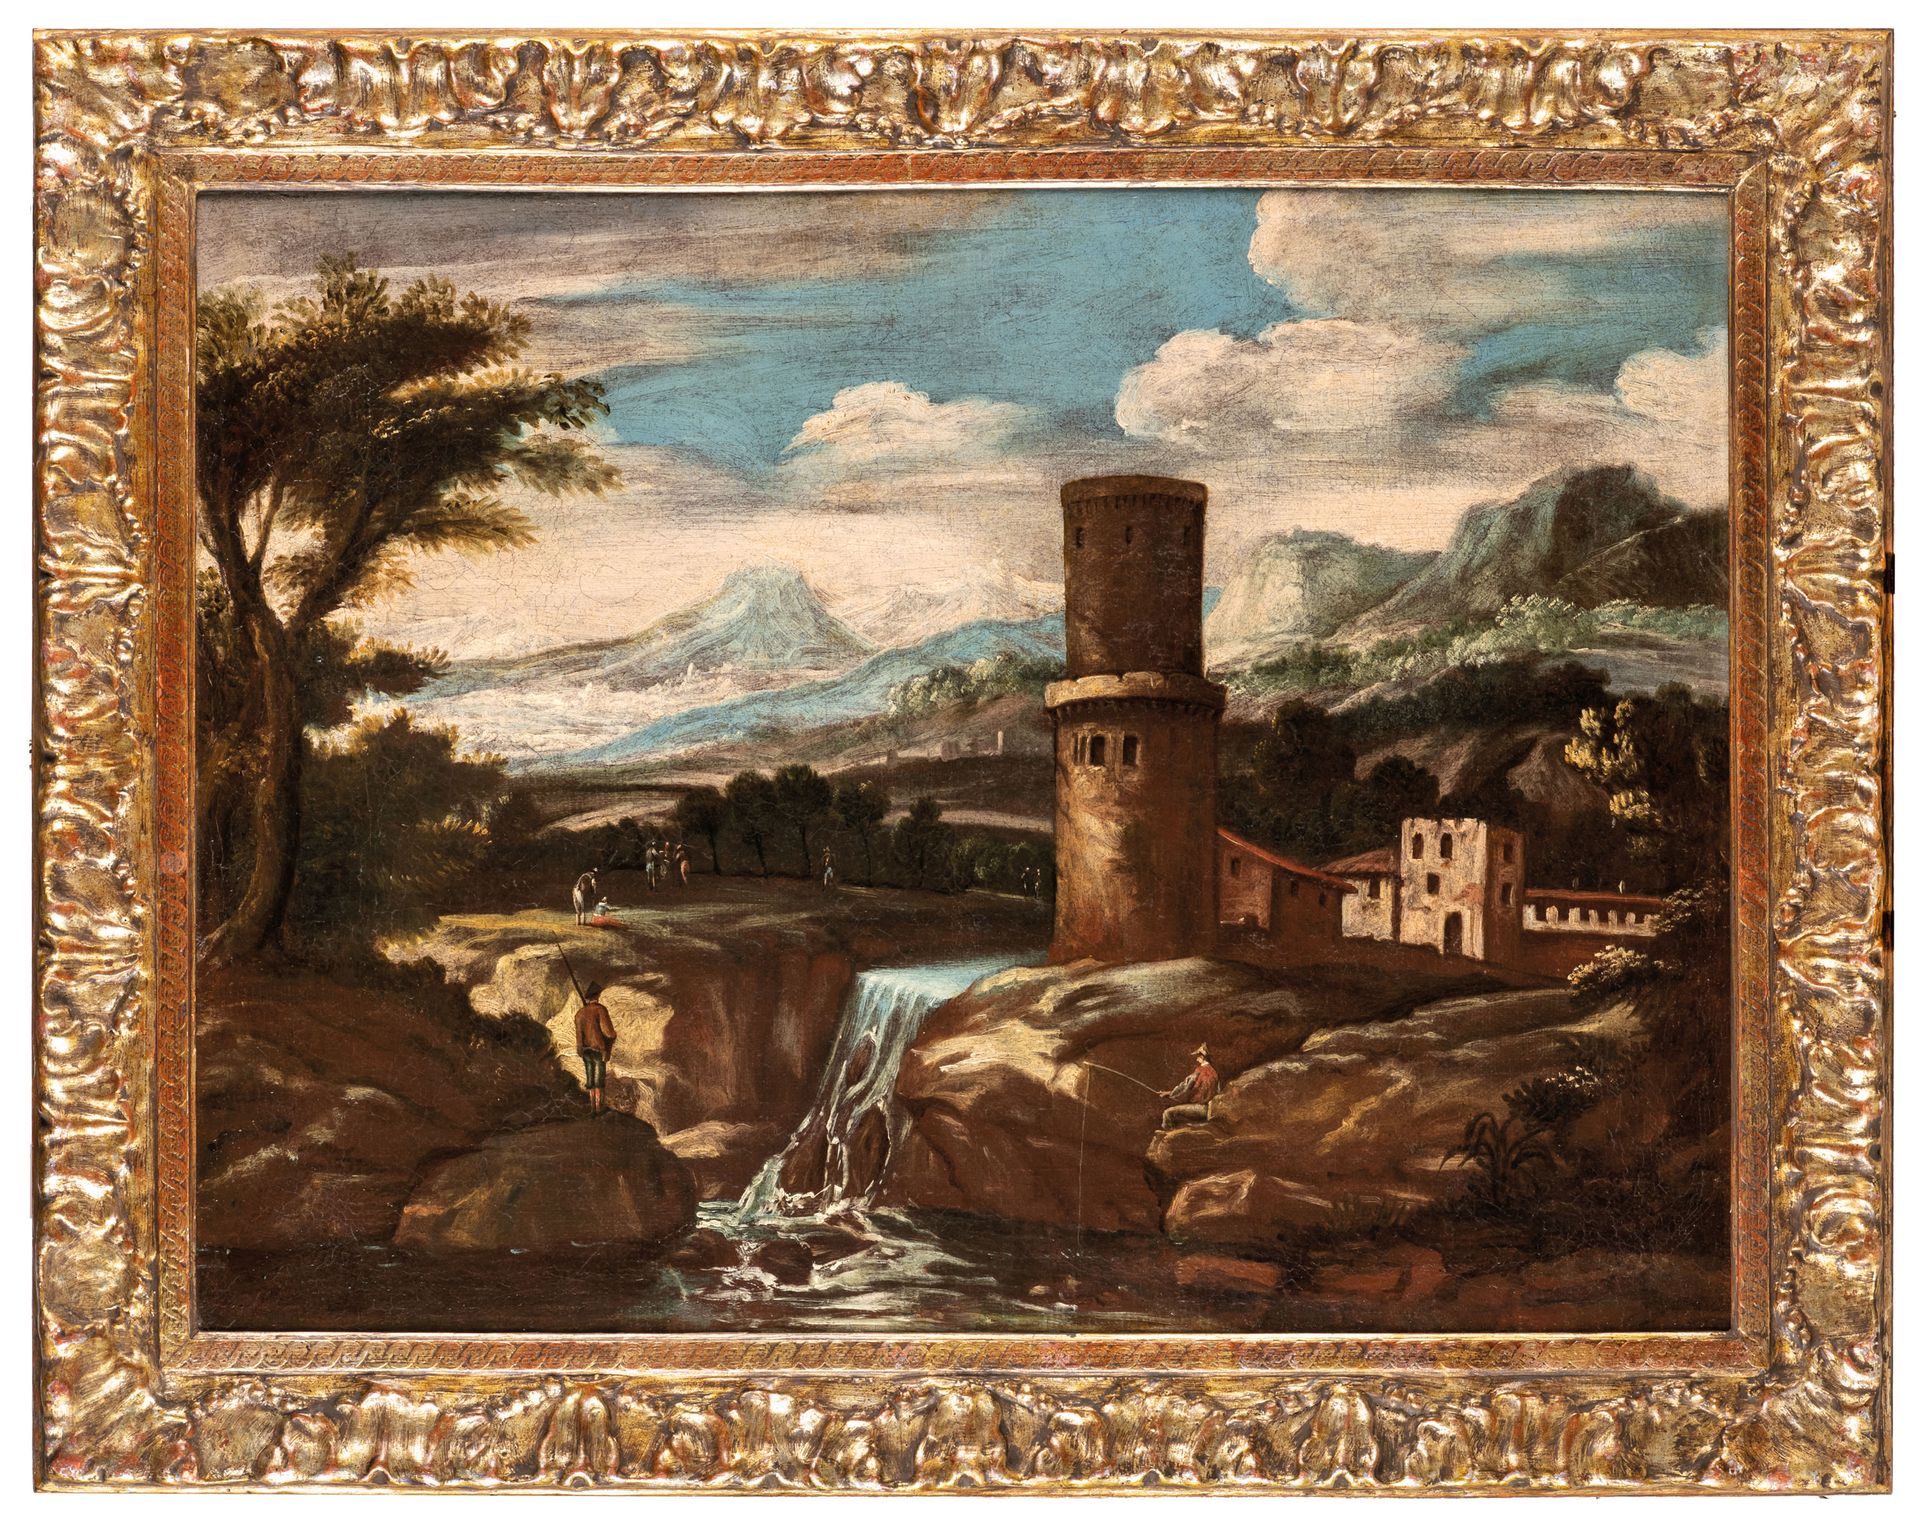 ALESSIO DE MARCHIS (attr. A) (Neapel, 1684 - Perugia, 1752)
Landschaft
Öl auf Le&hellip;